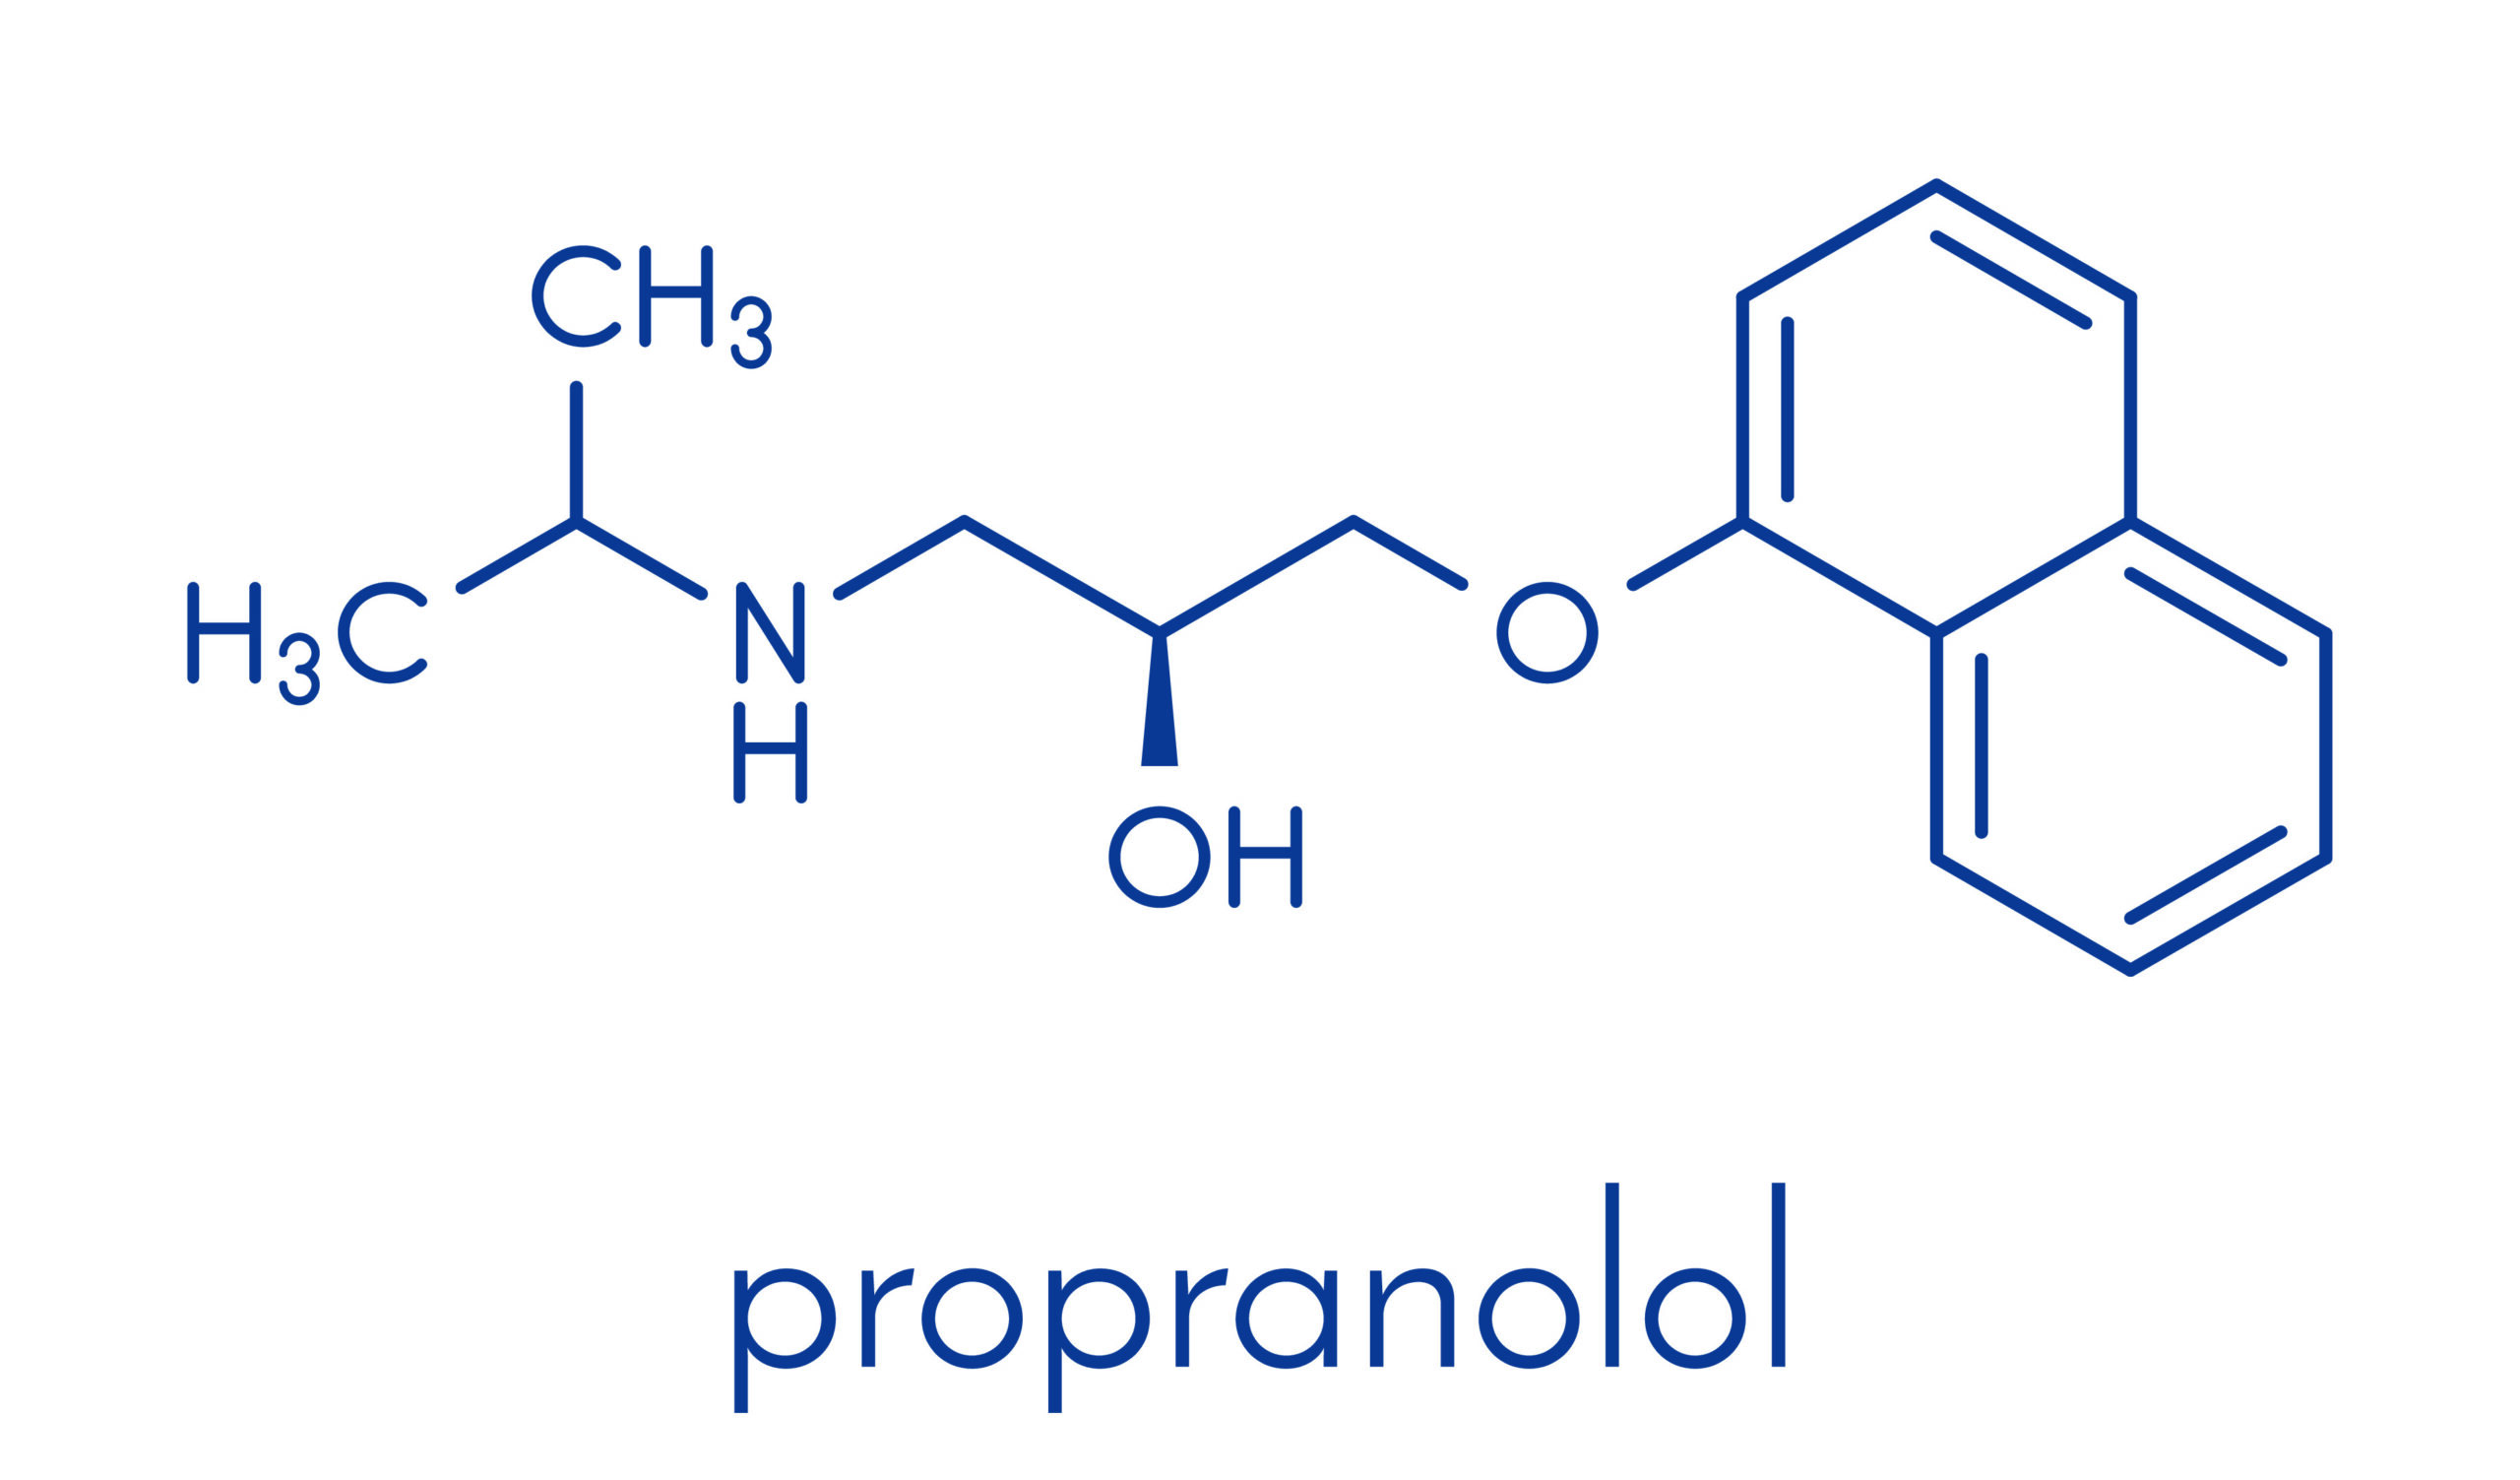 propranolol